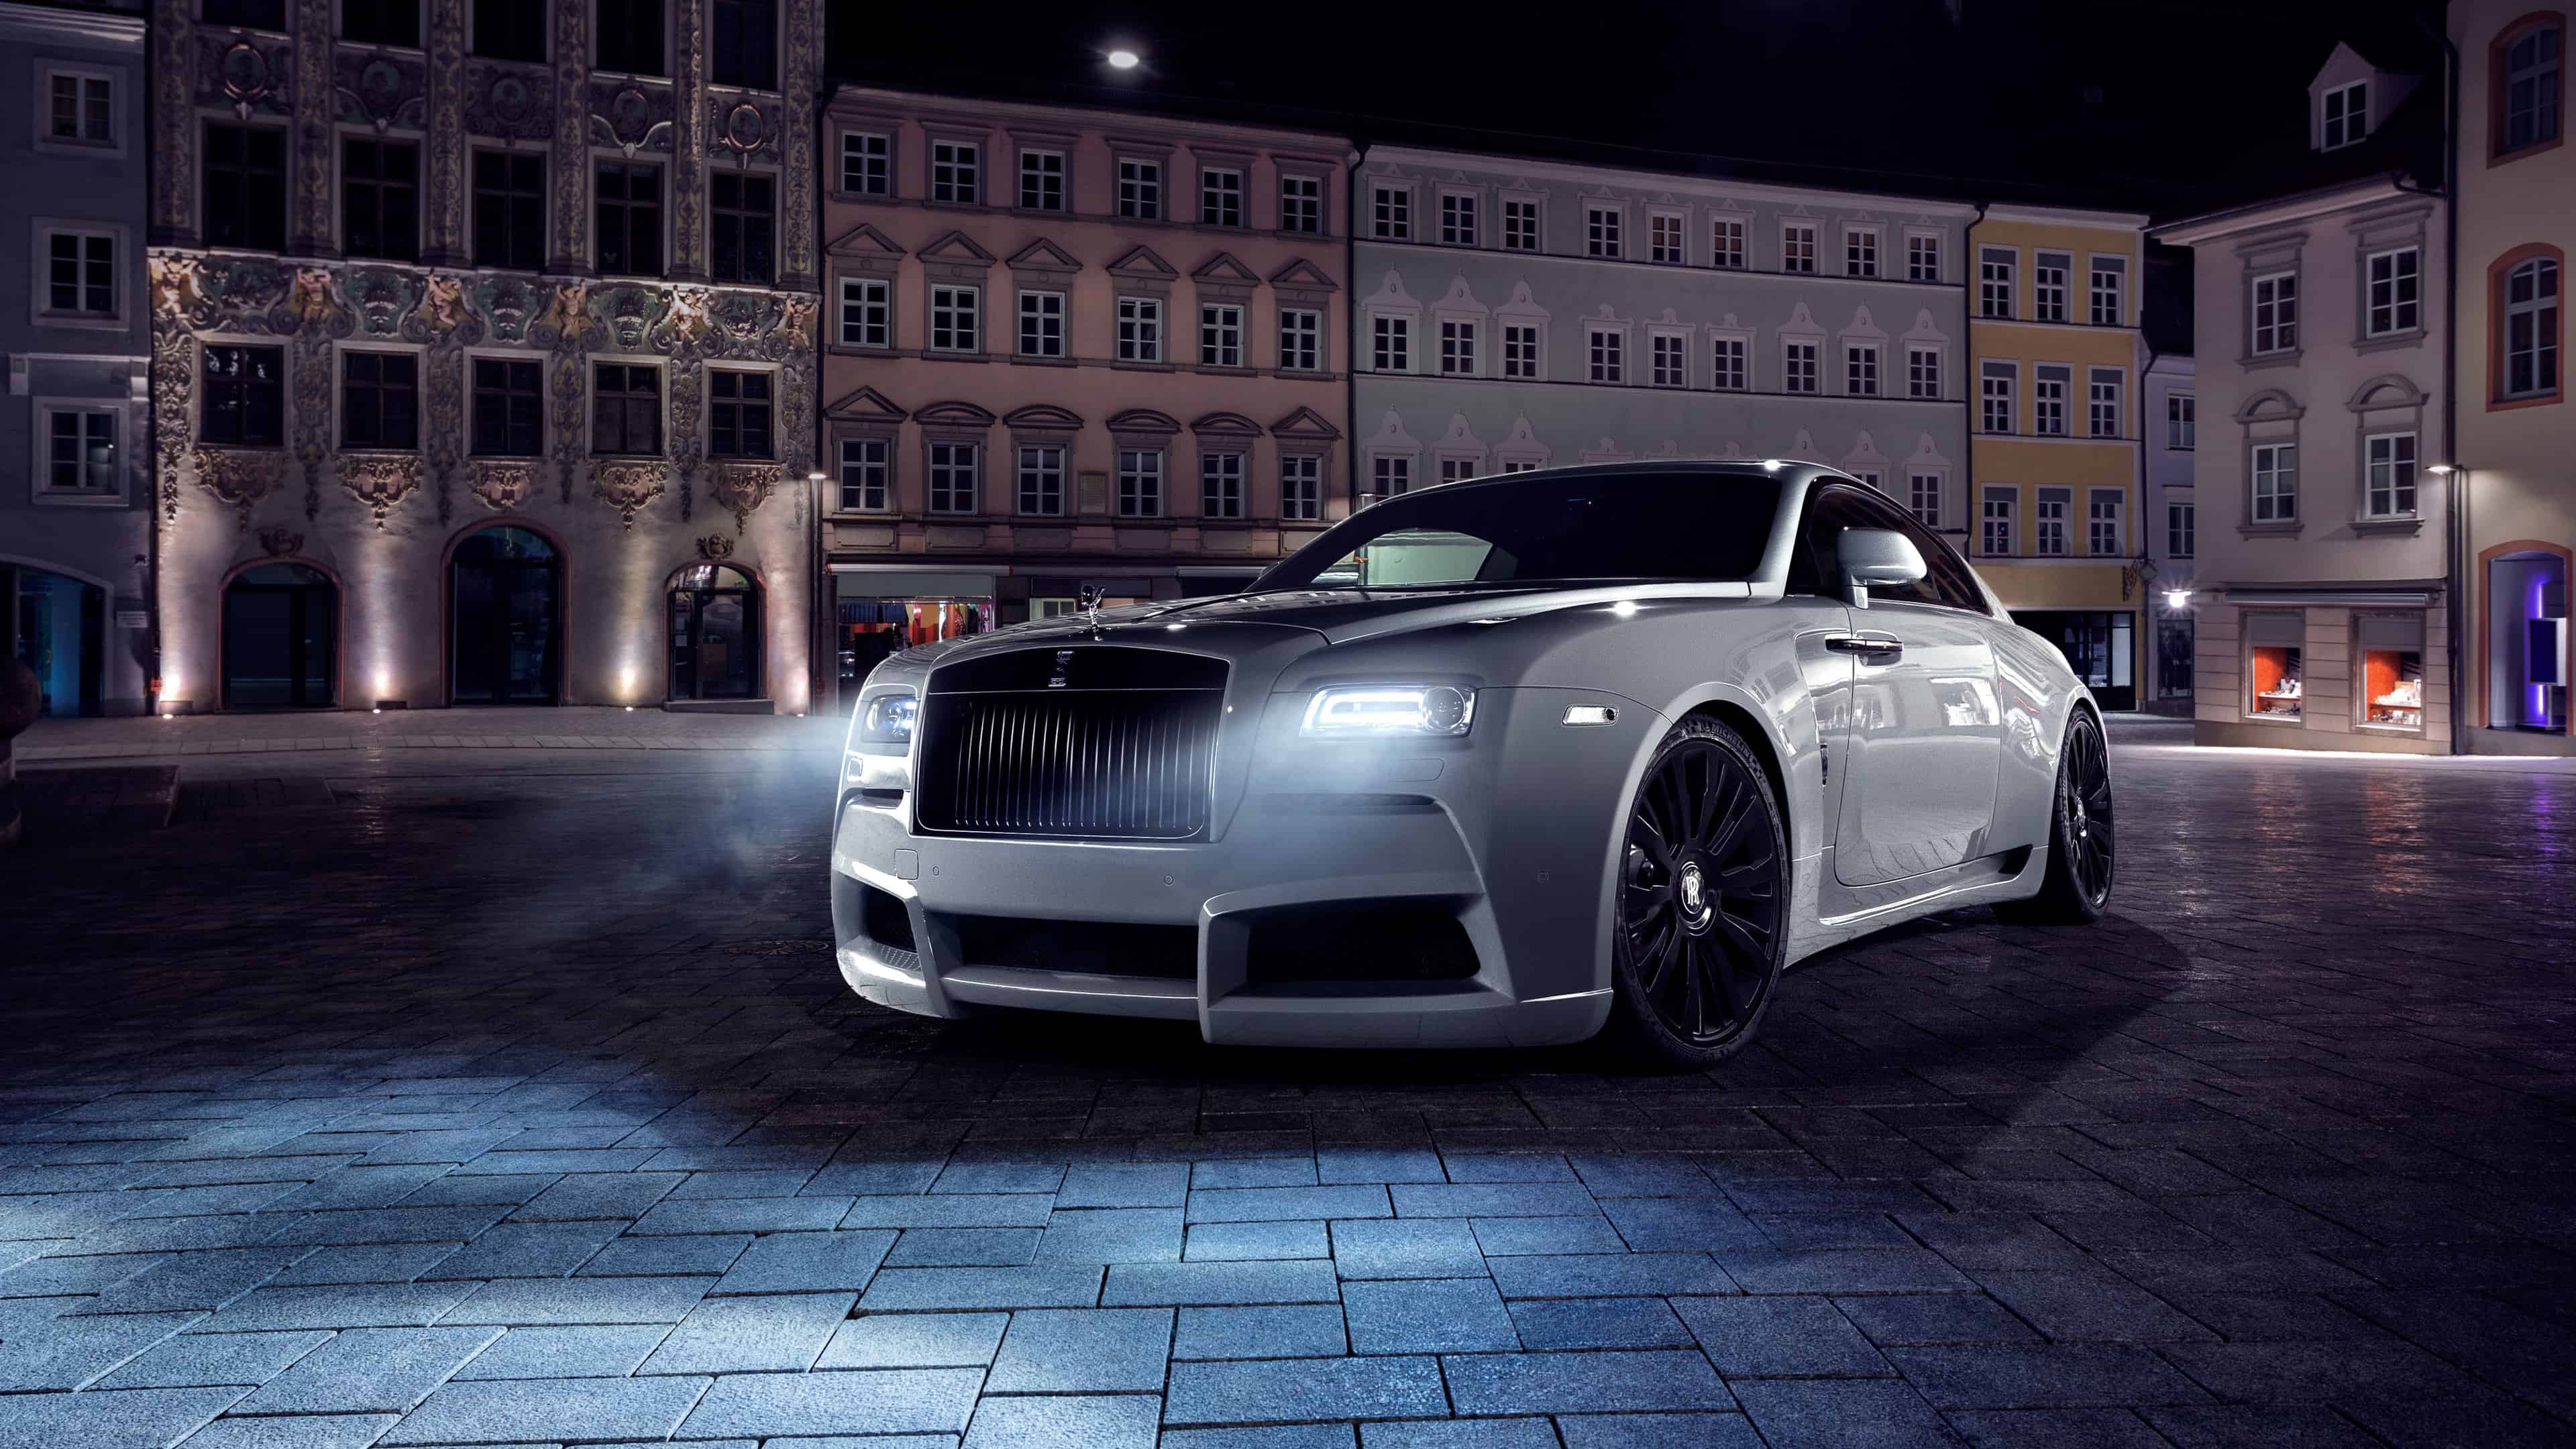 Rolls-Royce Wraith, UHD 4K wallpaper, Exquisite luxury car, Visual masterpiece, 3840x2160 4K Desktop